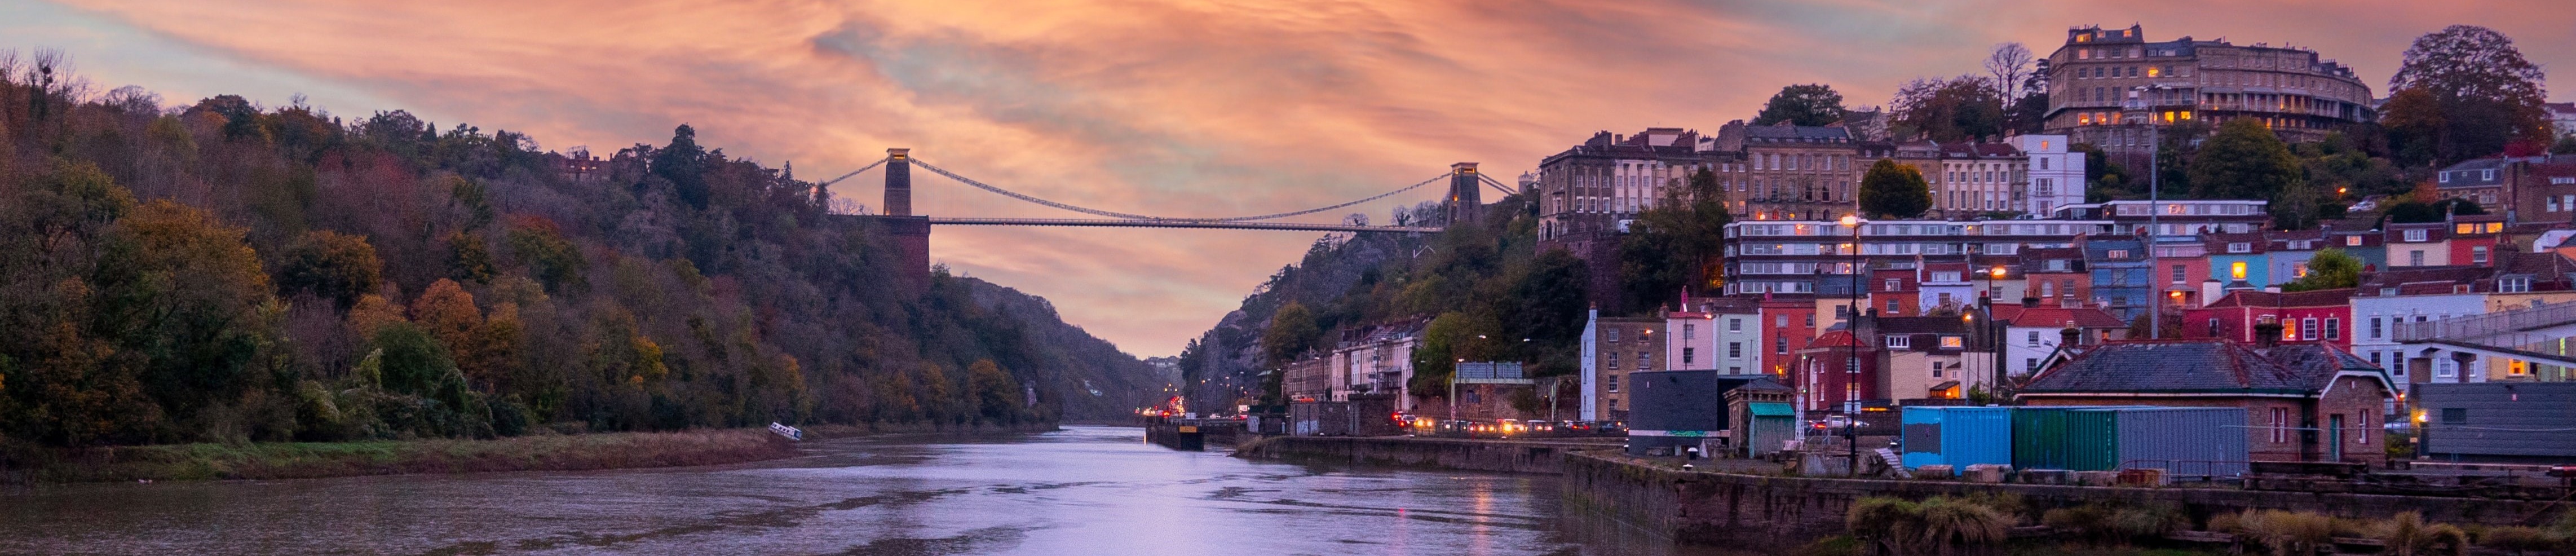 City of Bristol skyline showing the Clifton suspension bridge